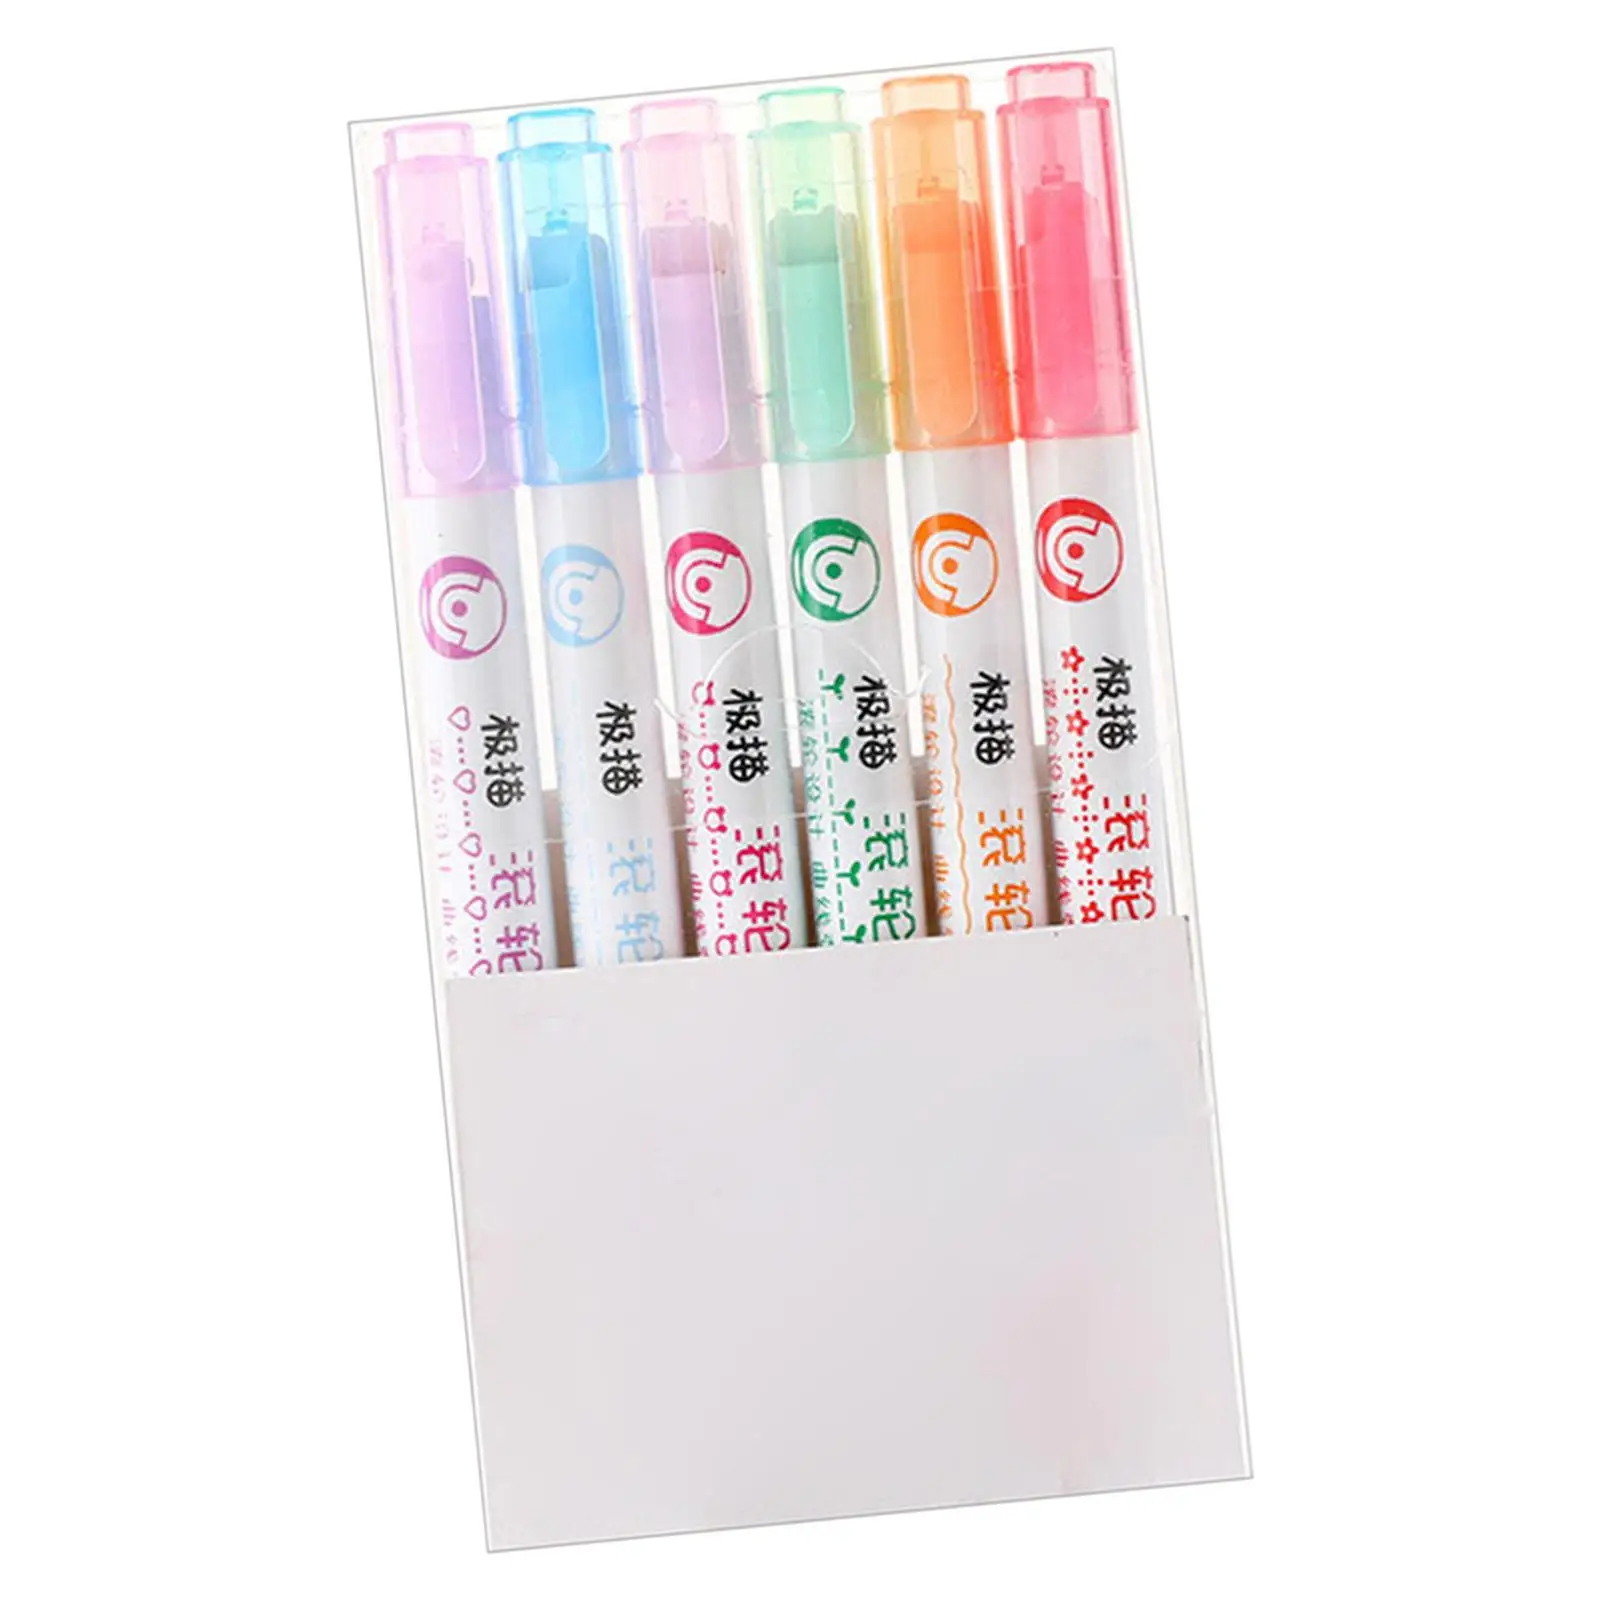 6 Pieces flower dots Line Shaped Highlighter Pen Different Colors Marker pen Office Journaling Scrapbook Drawing Marker